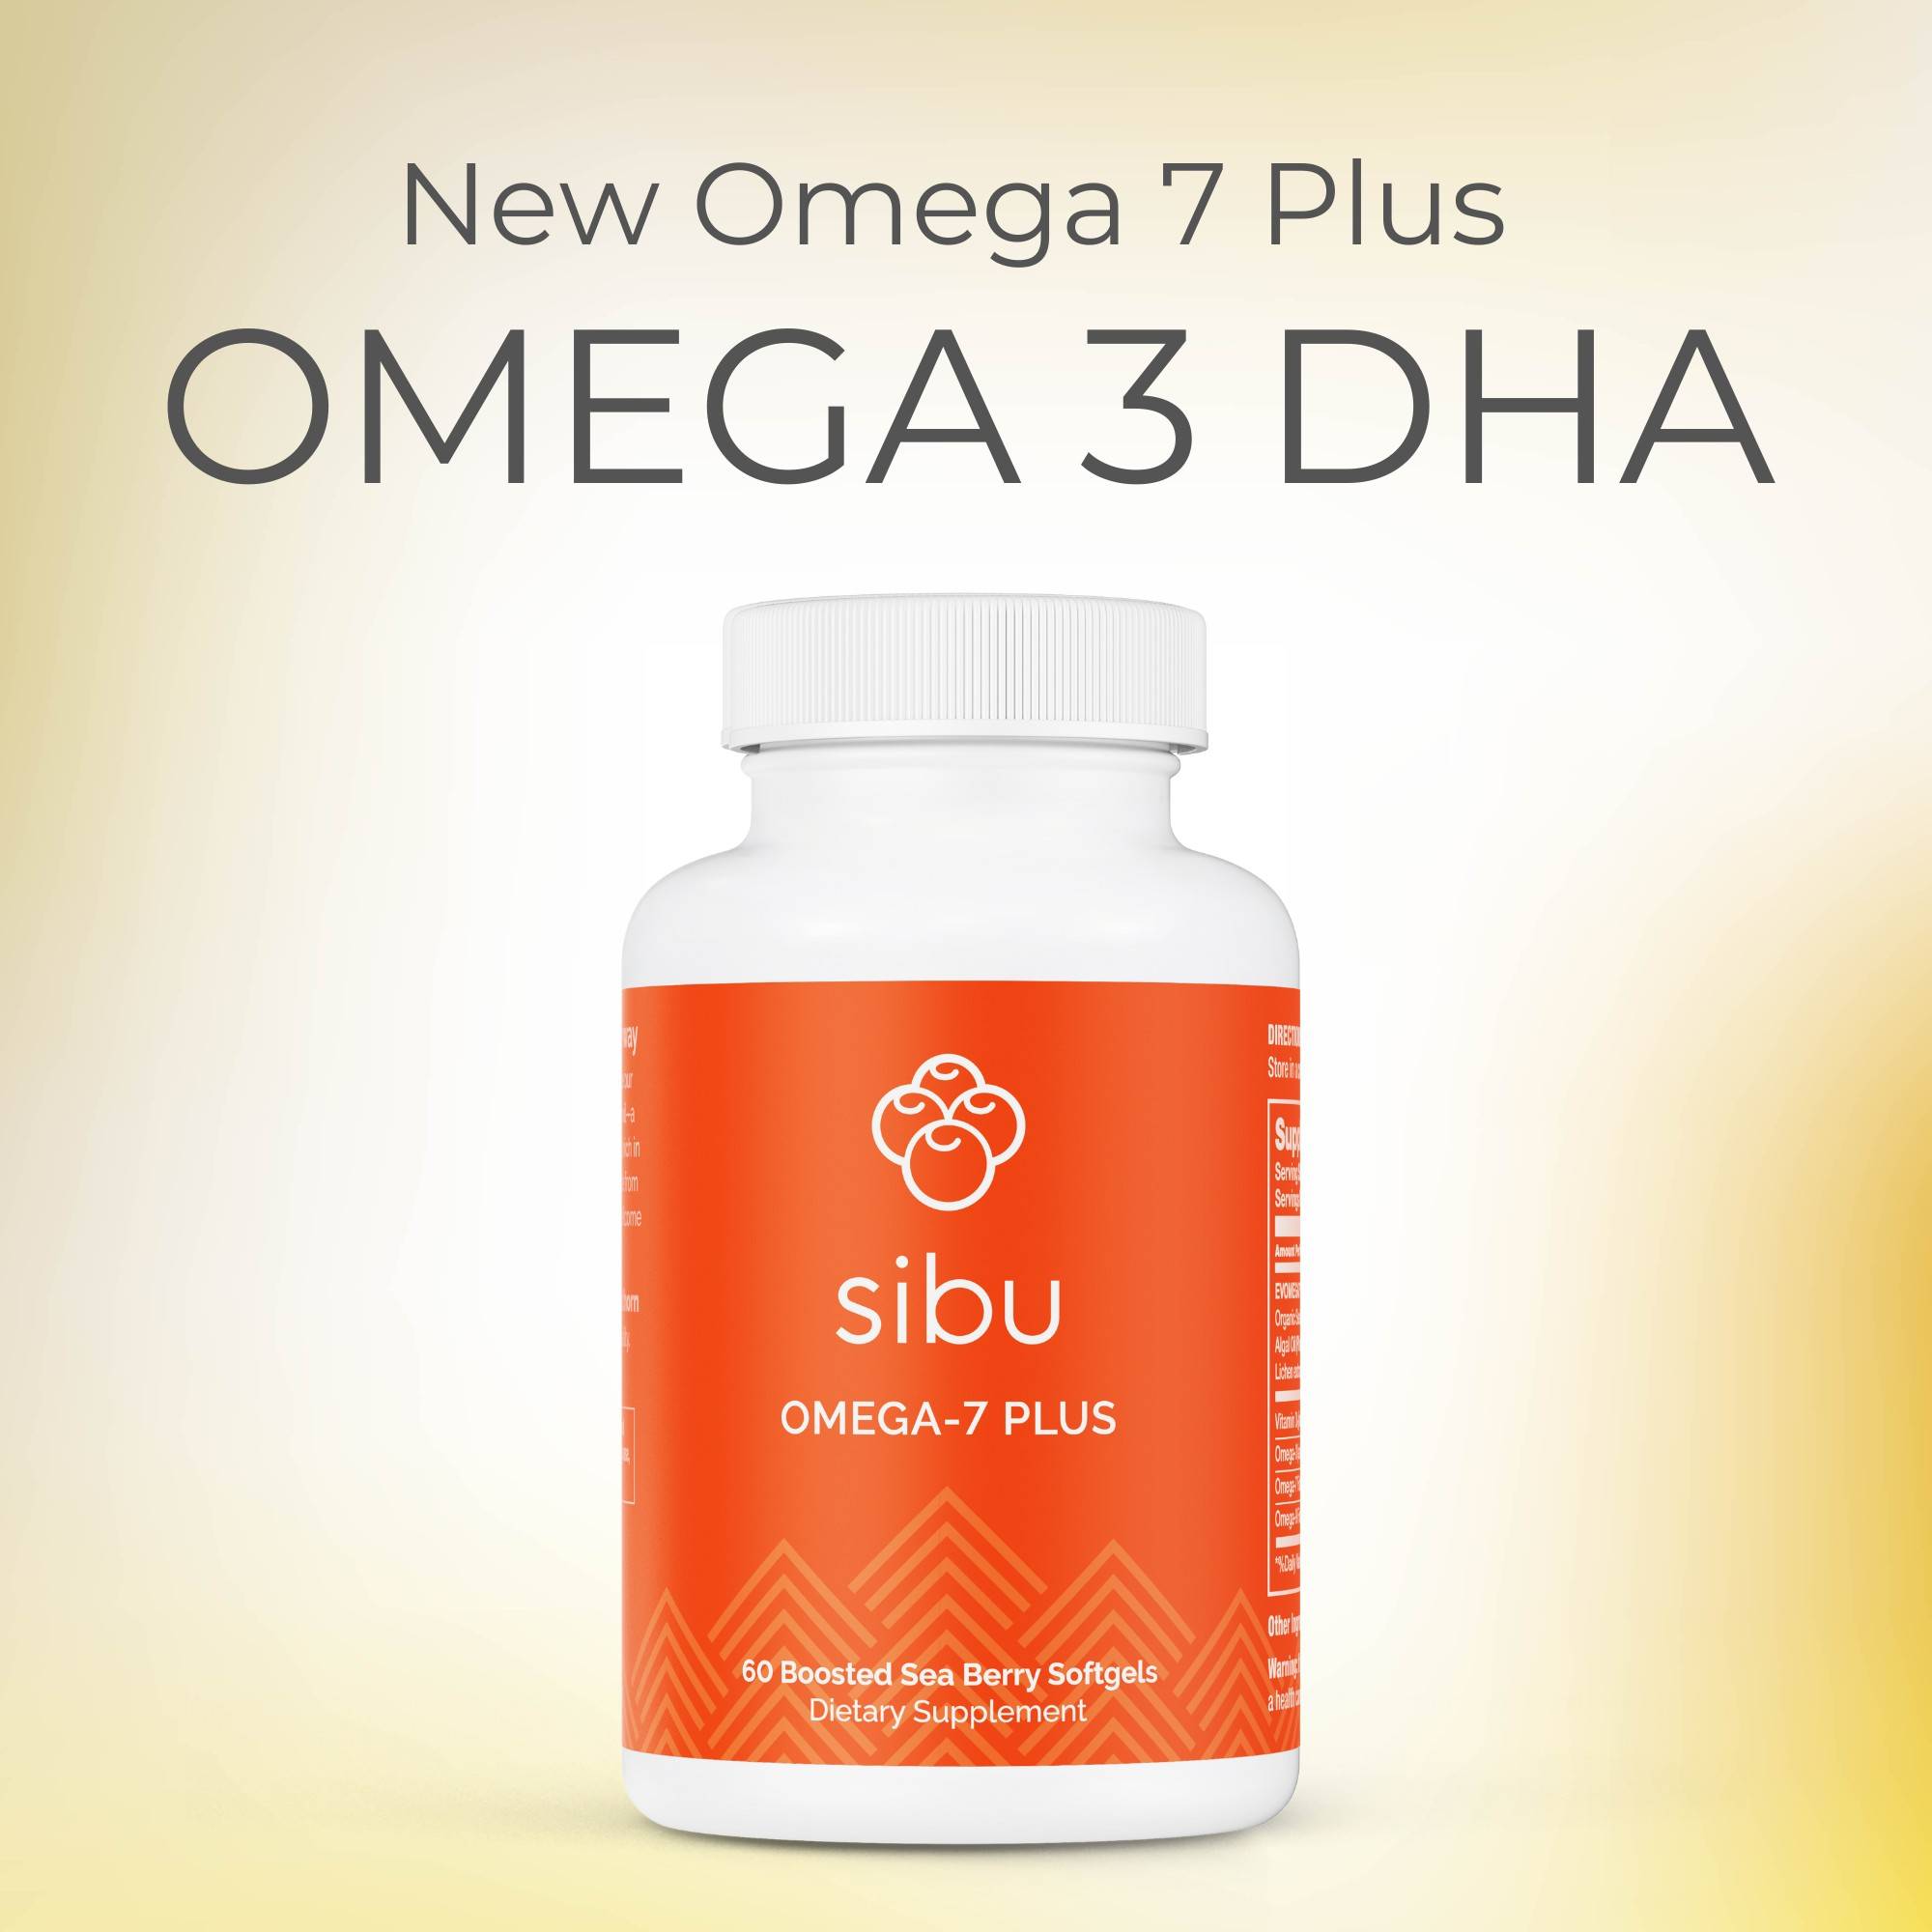 New Omega 7 Plus with Omega 3 DHA & Vitamin D3